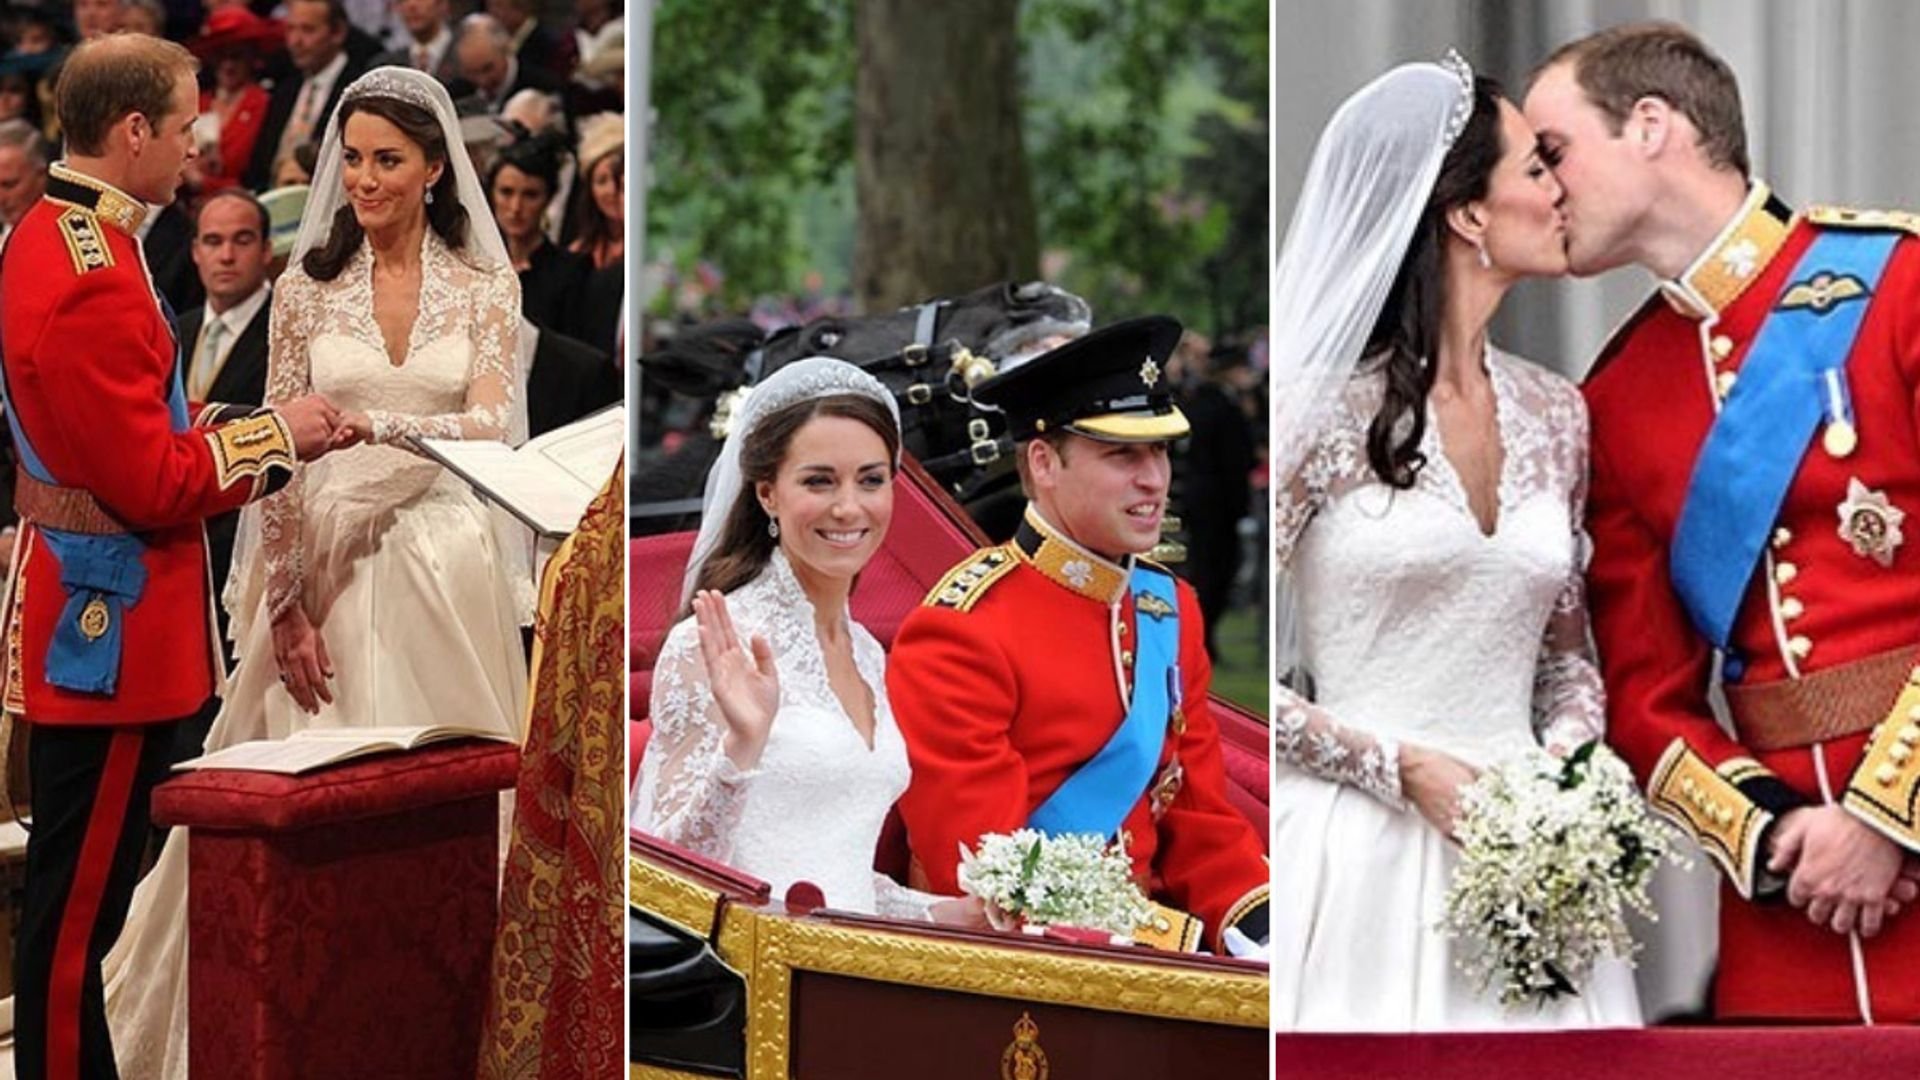 Prince William & Kate Middleton's royal wedding captured on camera